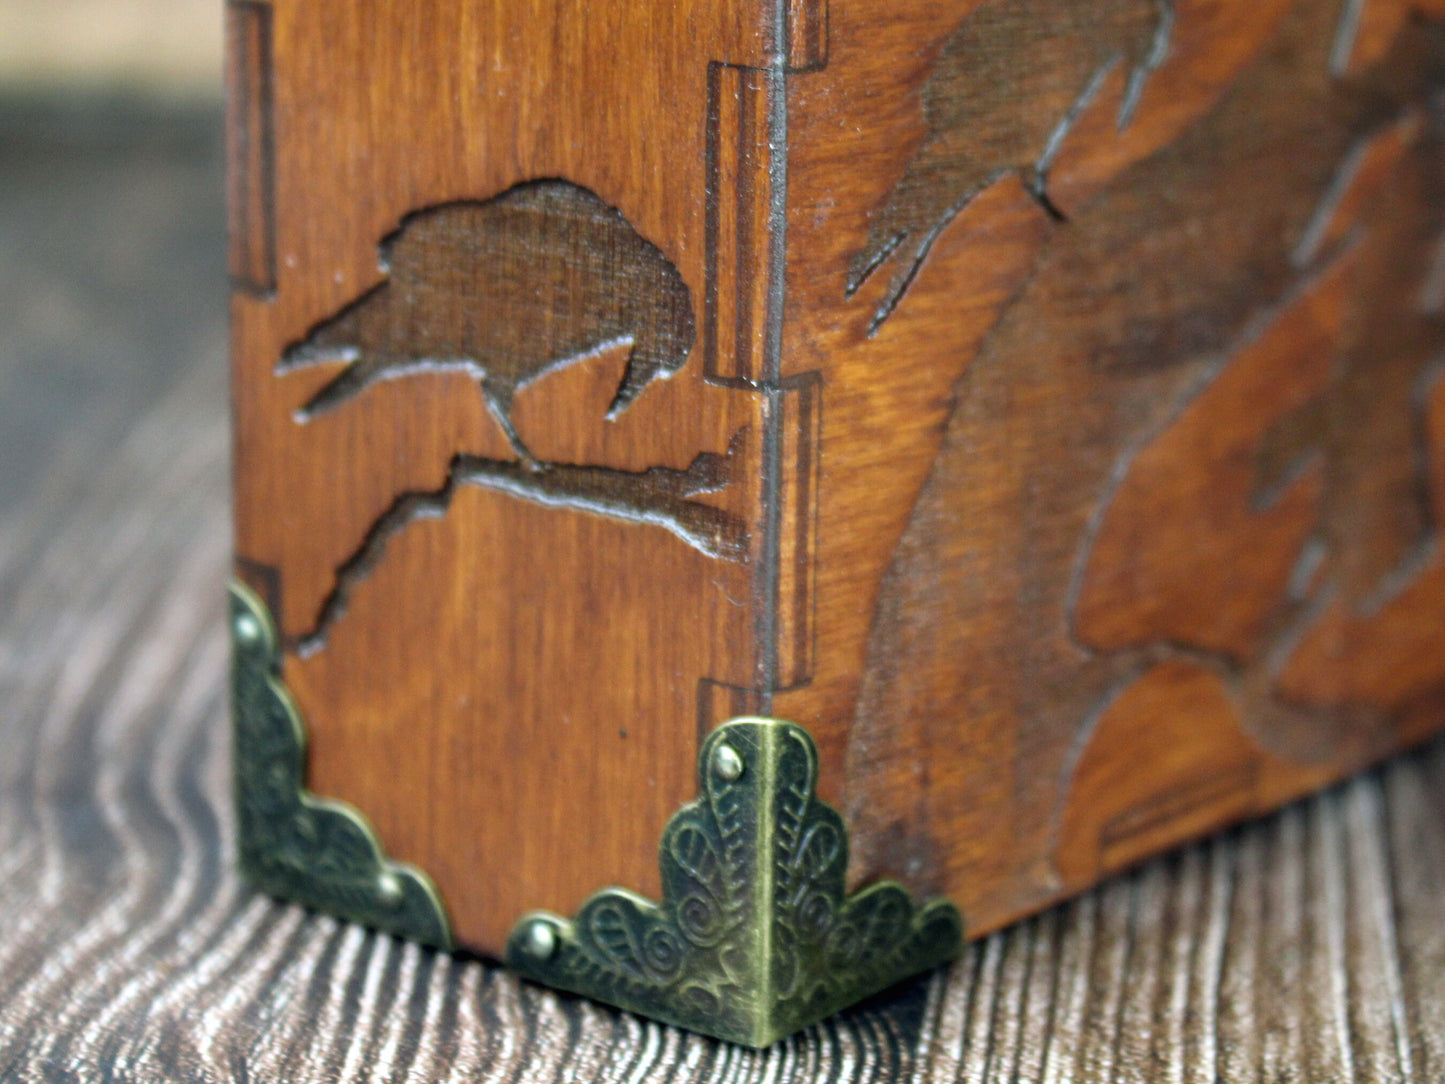 Wooden shoulder handbag with engraved gothic crow design, vegan purse